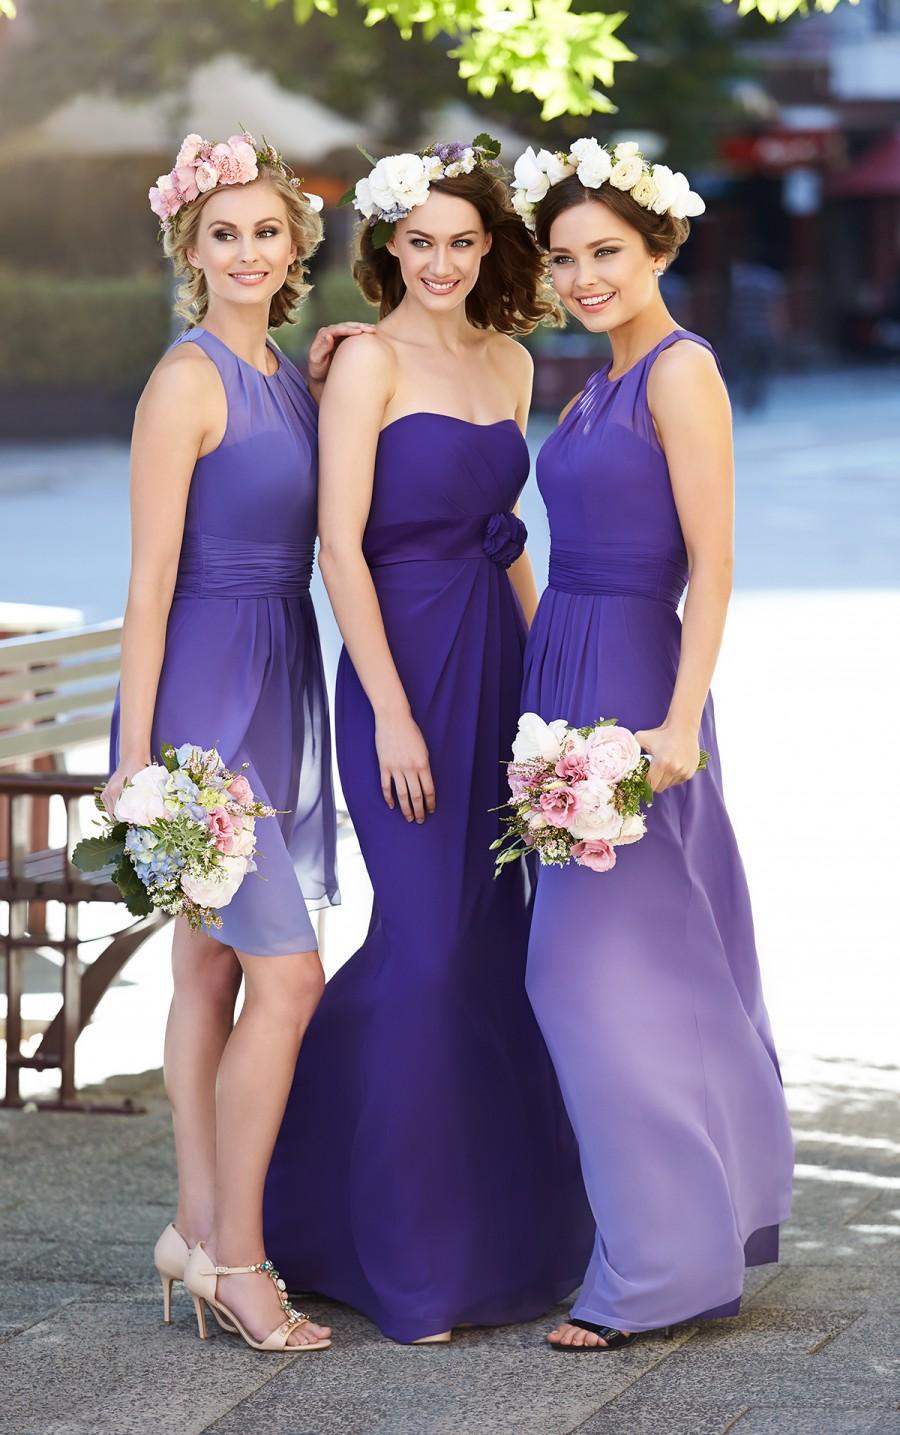 Mariage - Sorella Vita Ombre Bridesmaid Dress Style 8459OM